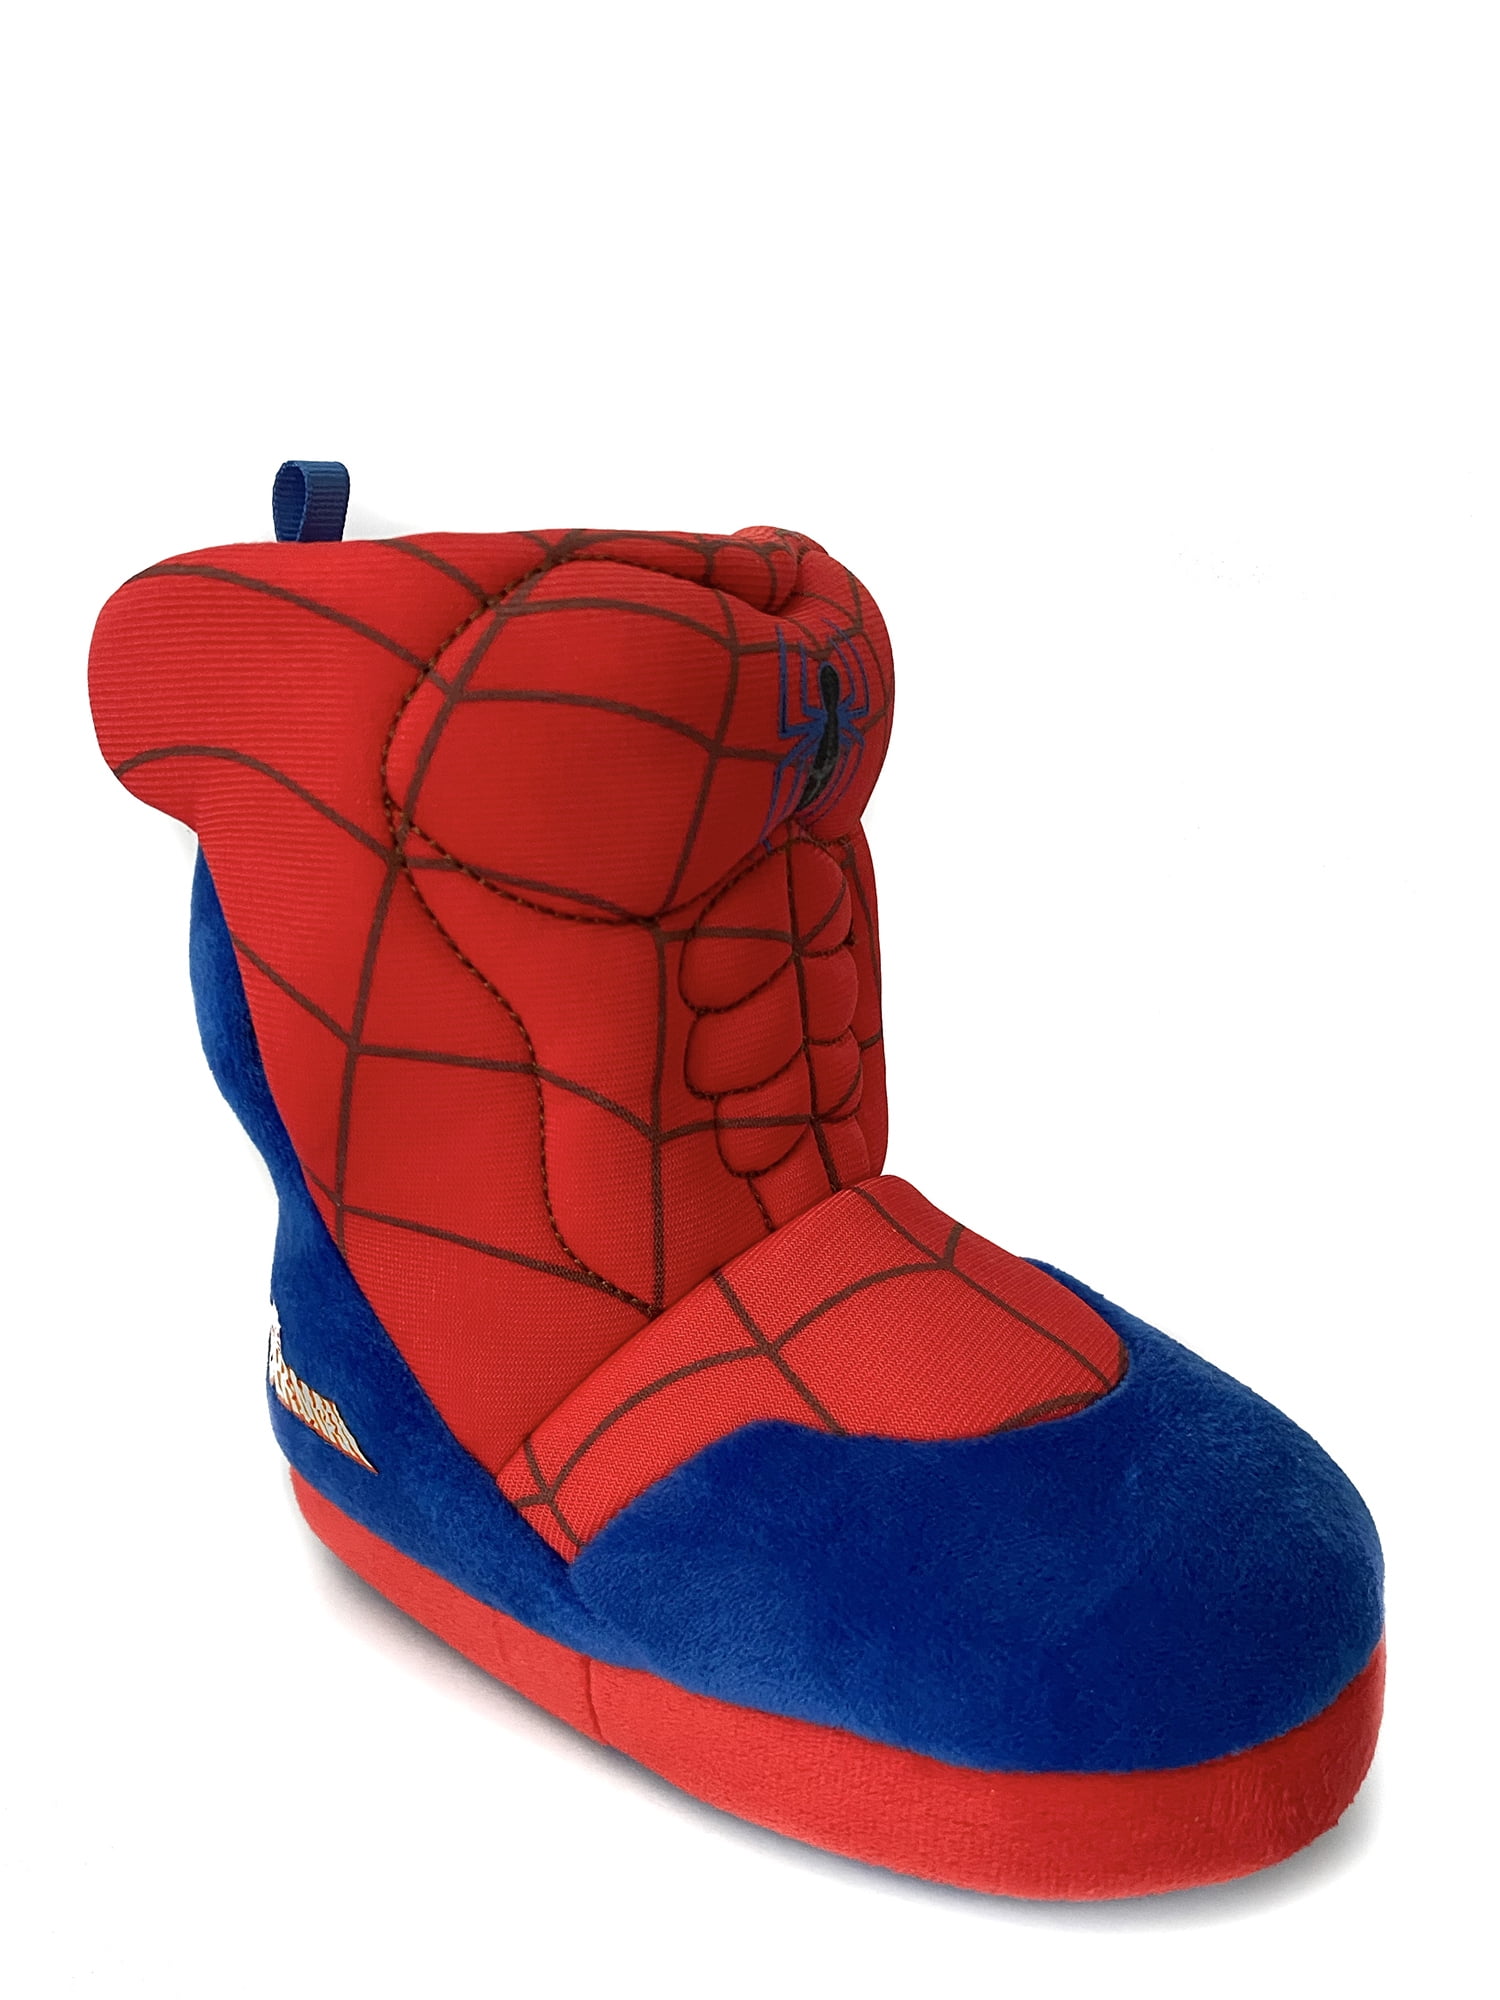 MARVEL Boys Spiderman Slipper Booties Kids Snuggle Fleece Lined Slippers Socks 